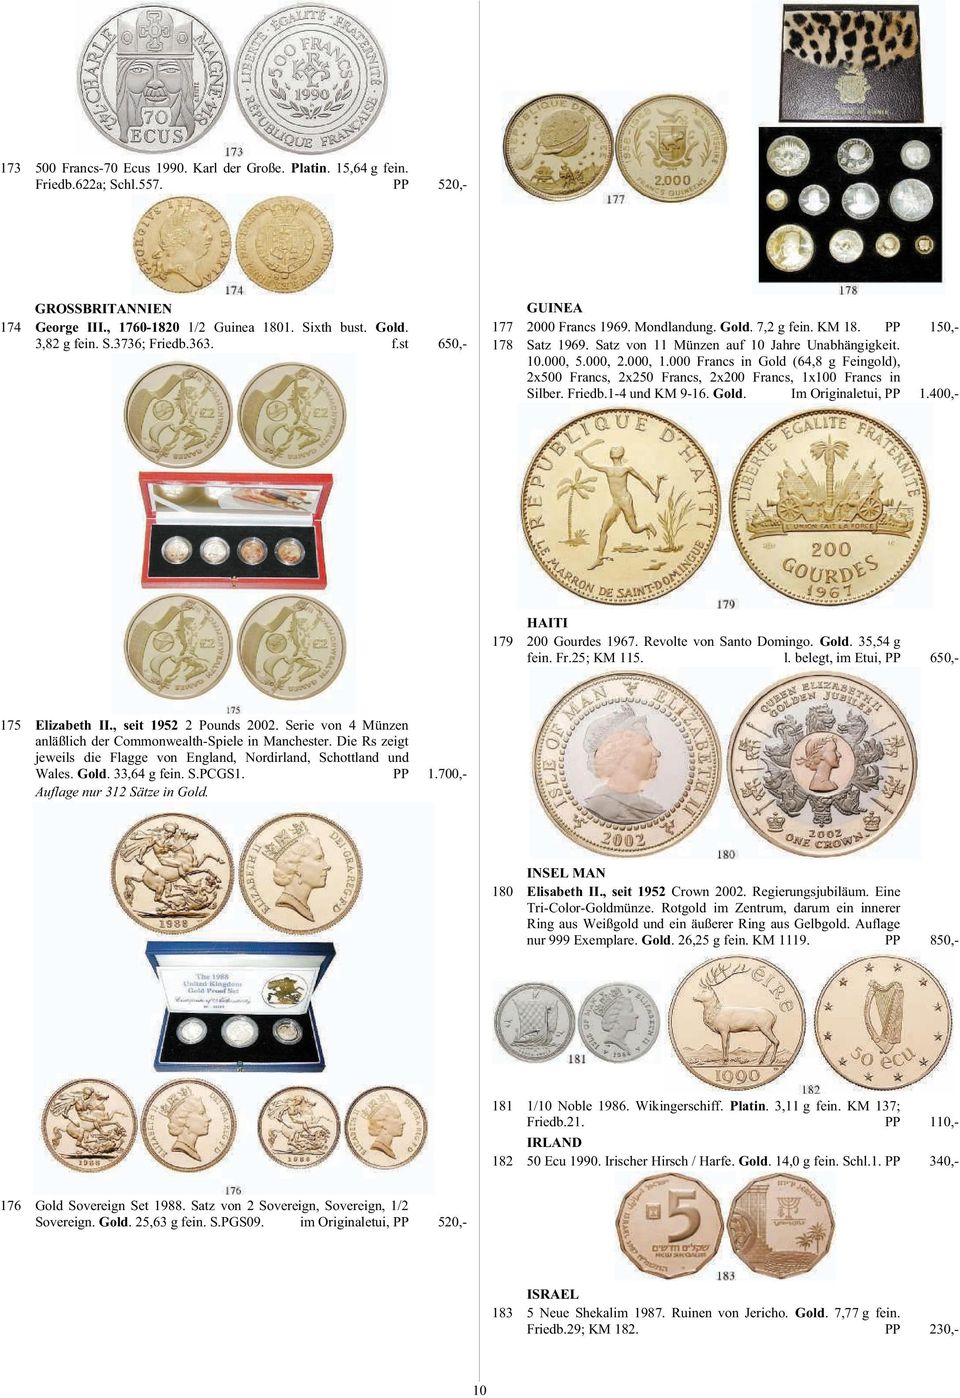 000 Francs in Gold (64,8 g Feingold), 2x500 Francs, 2x250 Francs, 2x200 Francs, 1x100 Francs in Silber. Friedb.1-4 und KM 9-16. Gold. Im Originaletui, PP 1.400,- HAITI 179 200 Gourdes 1967.